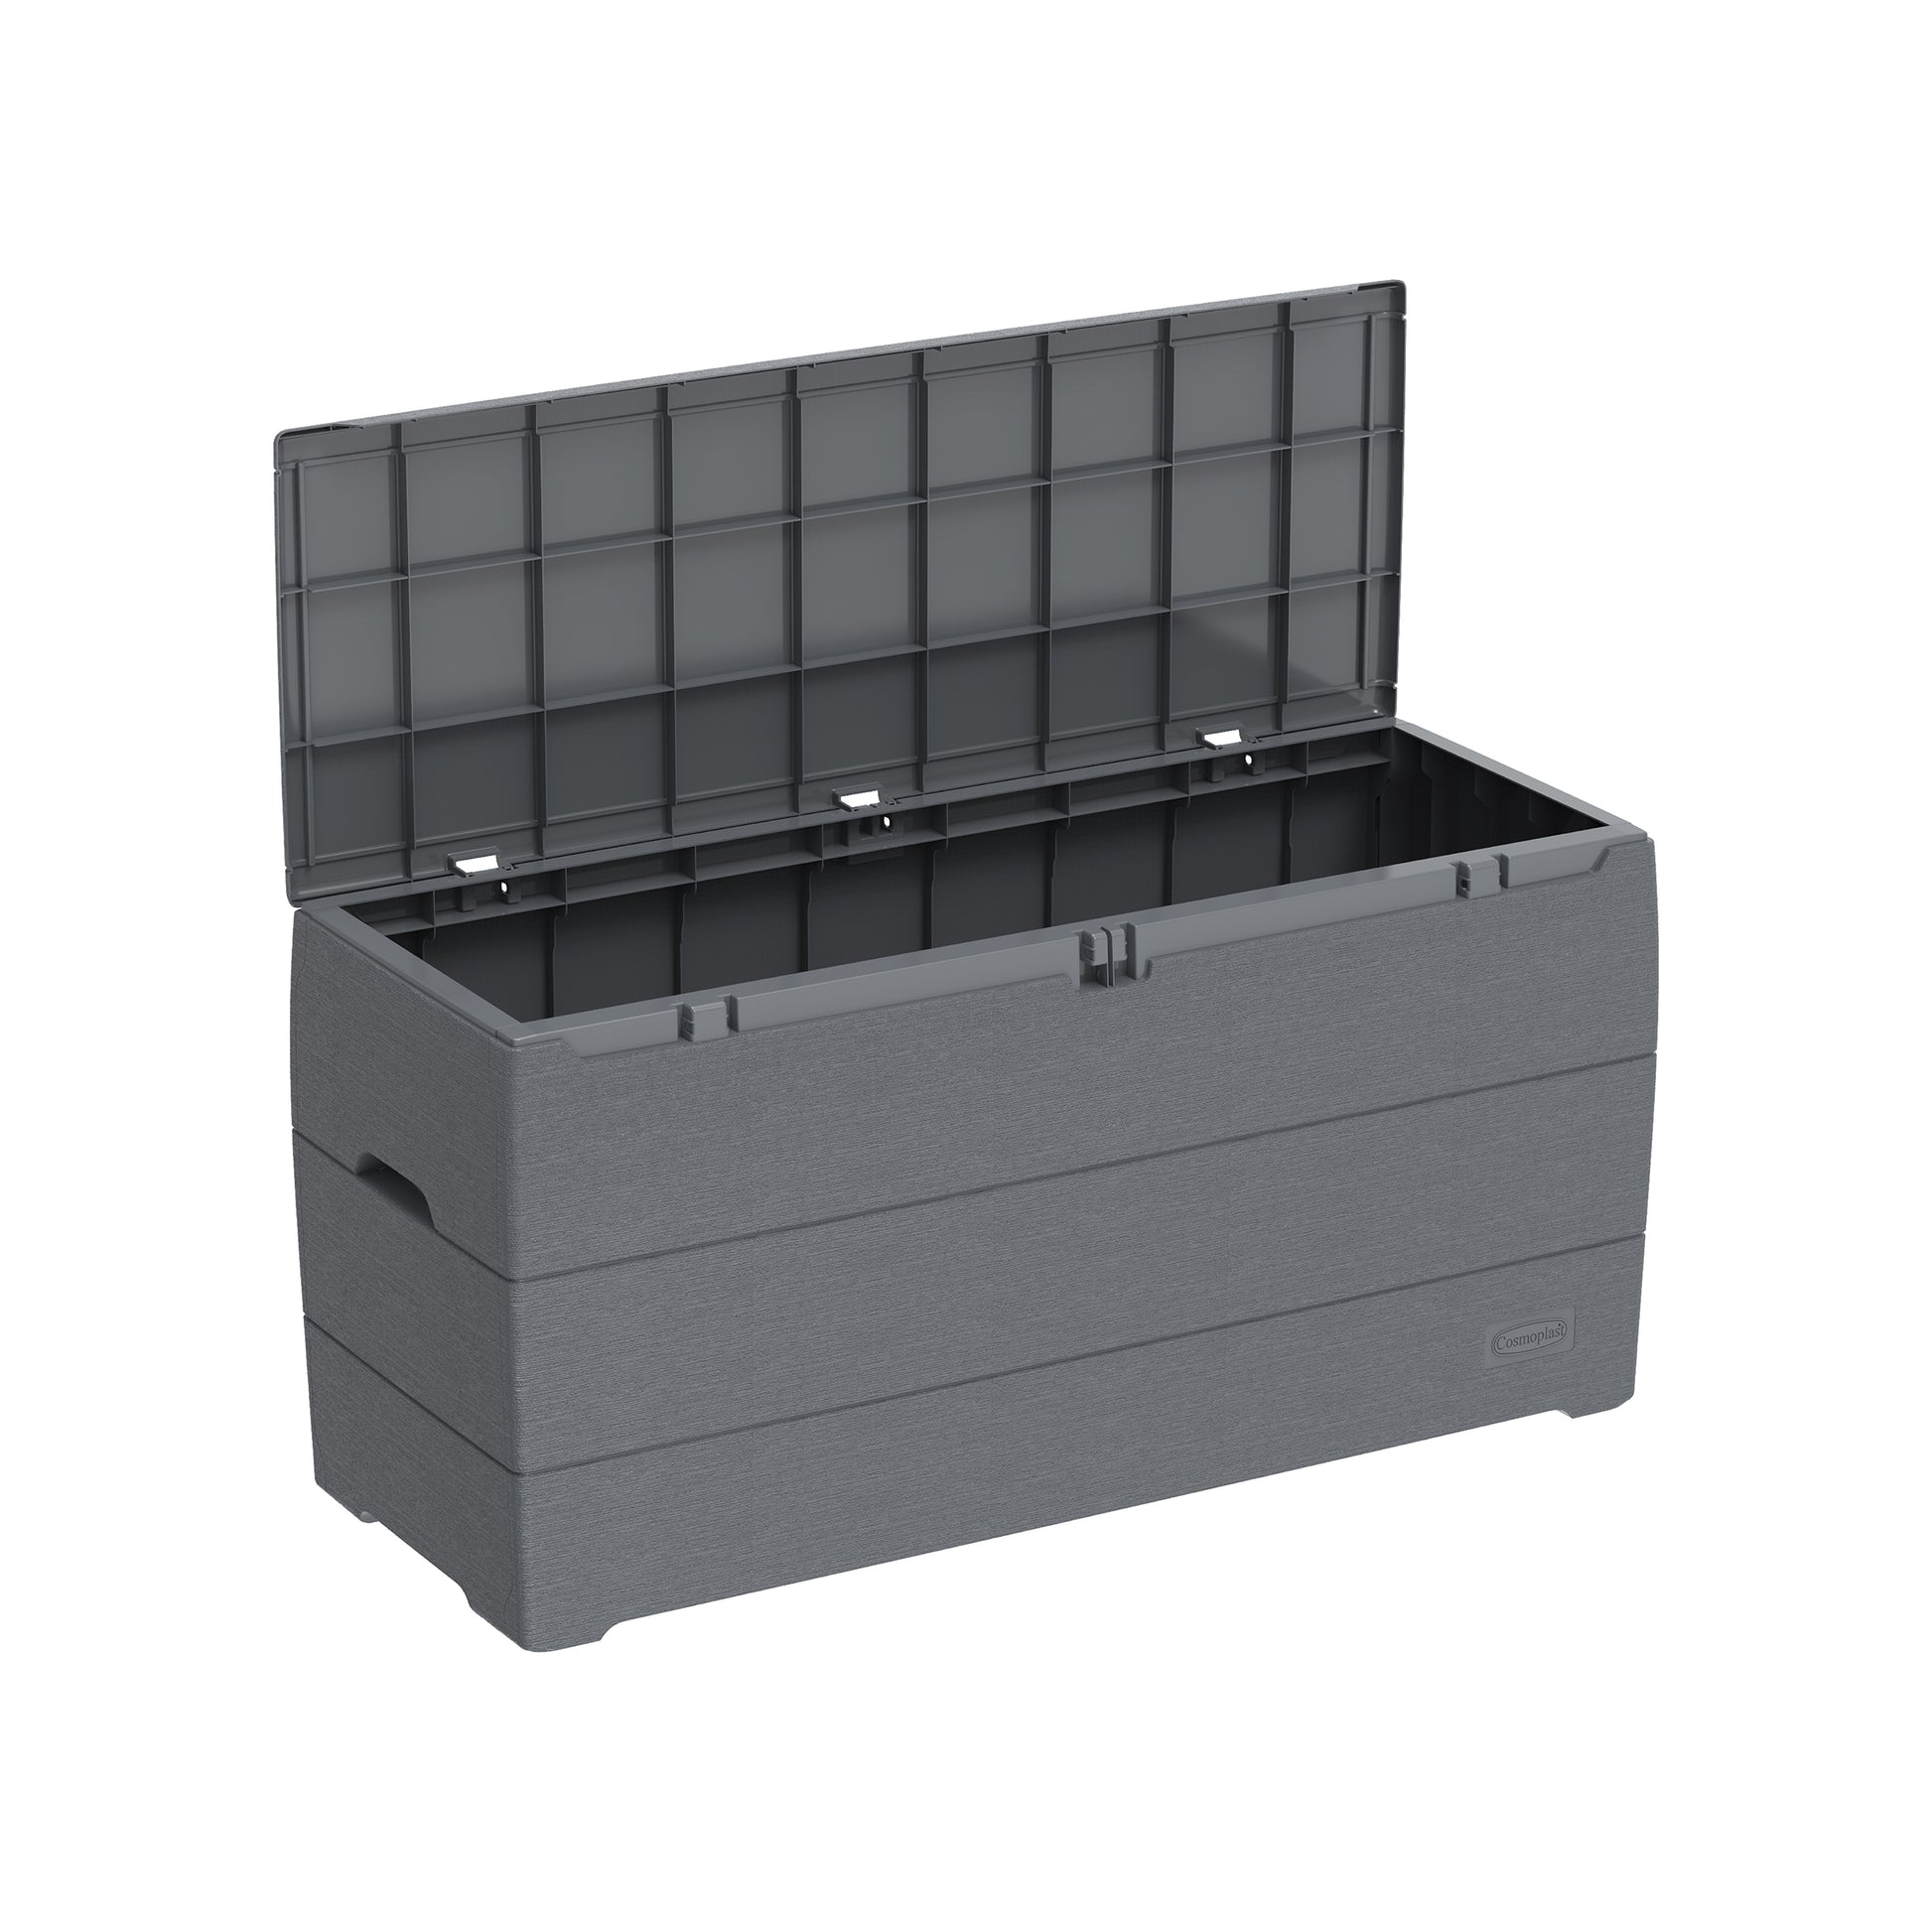 Cedargrain Resin Storage Deck Box 270L- Cosmoplast UAE